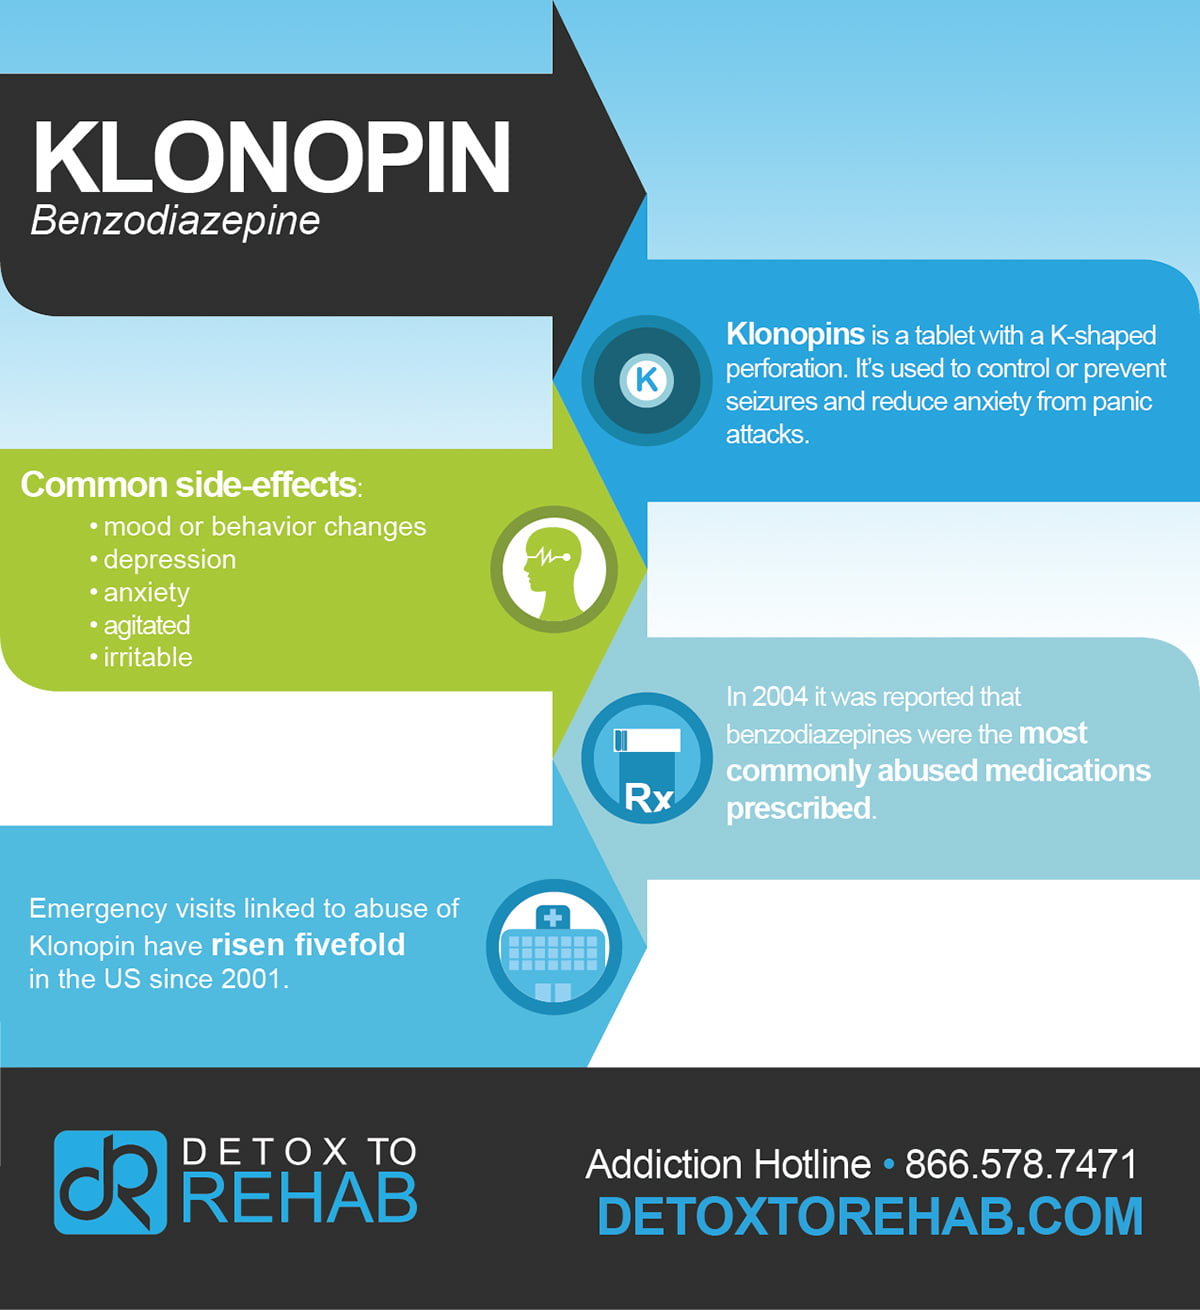 Does klonopin help depression